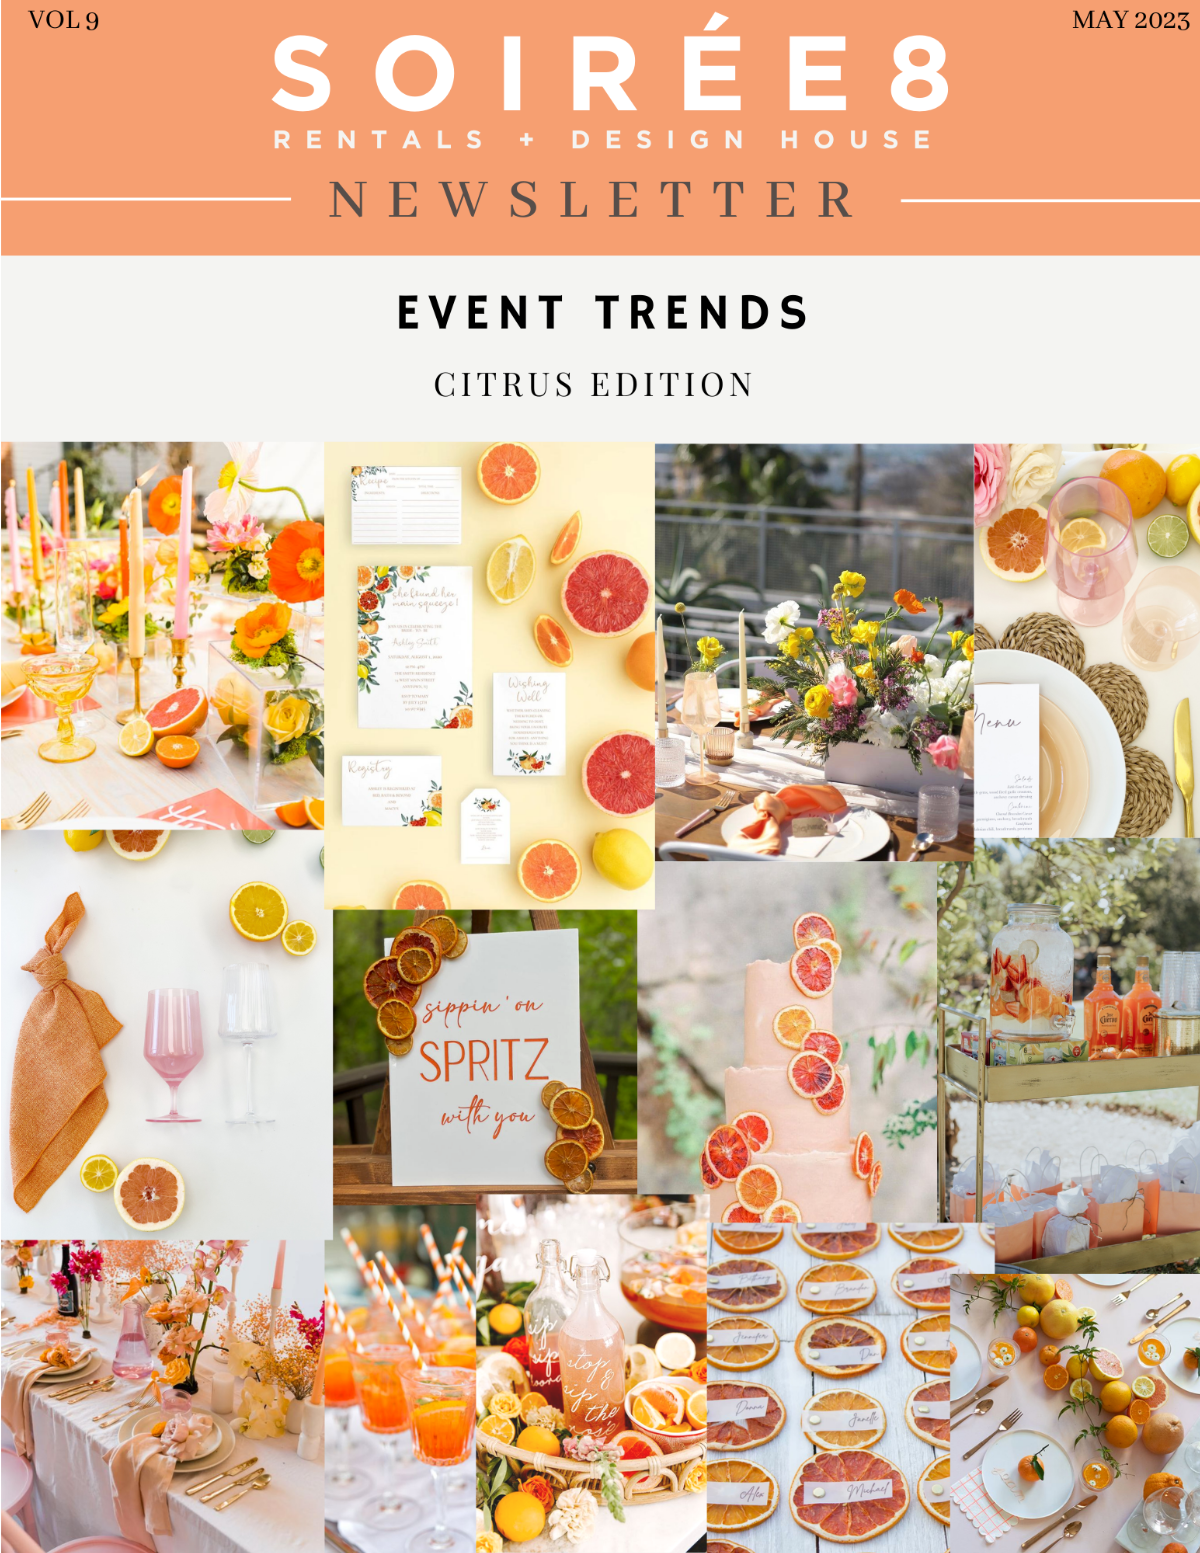 Vol. 9 Citrus Edition Event Trends Newsletter